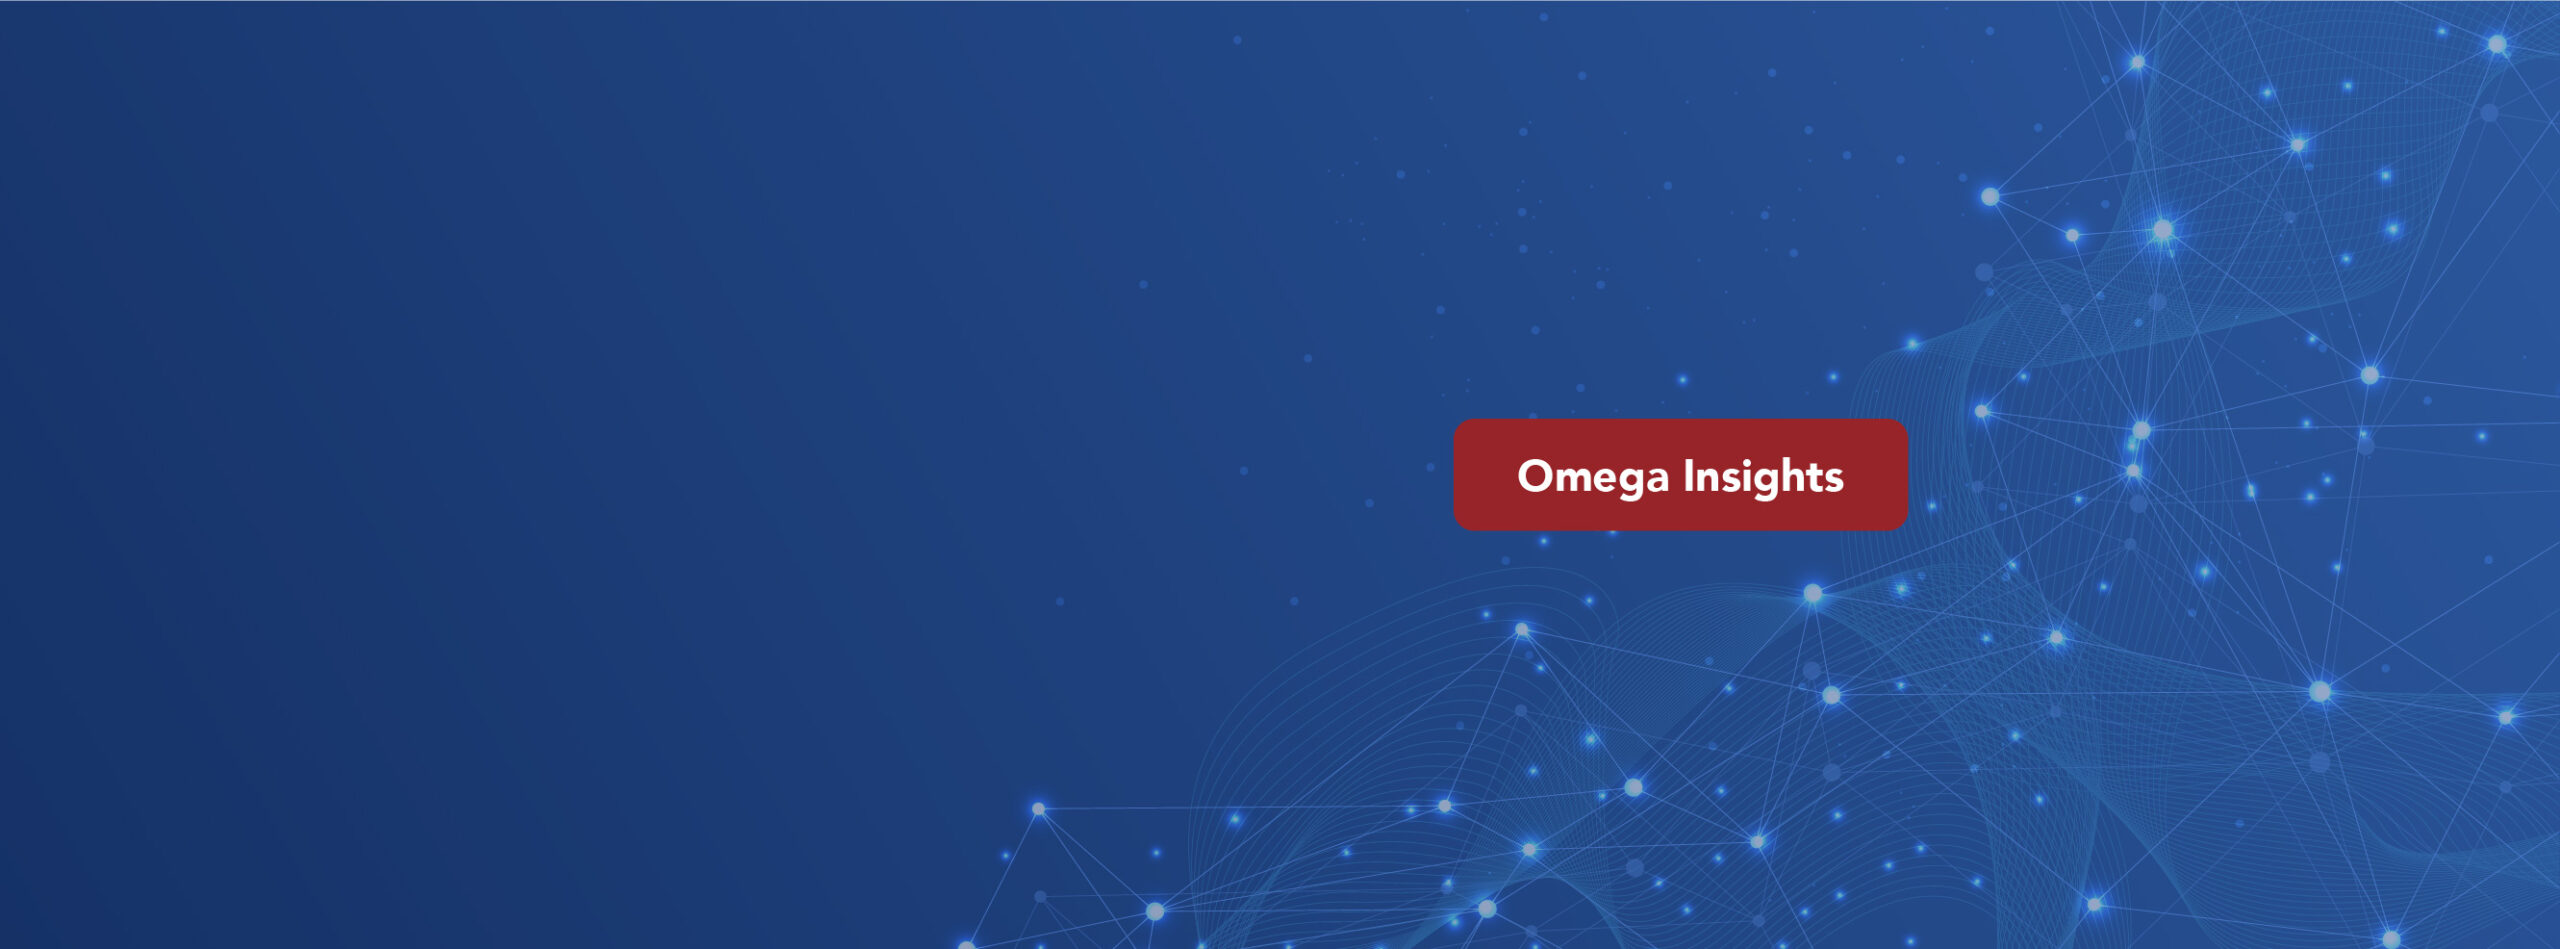 Omega Insights